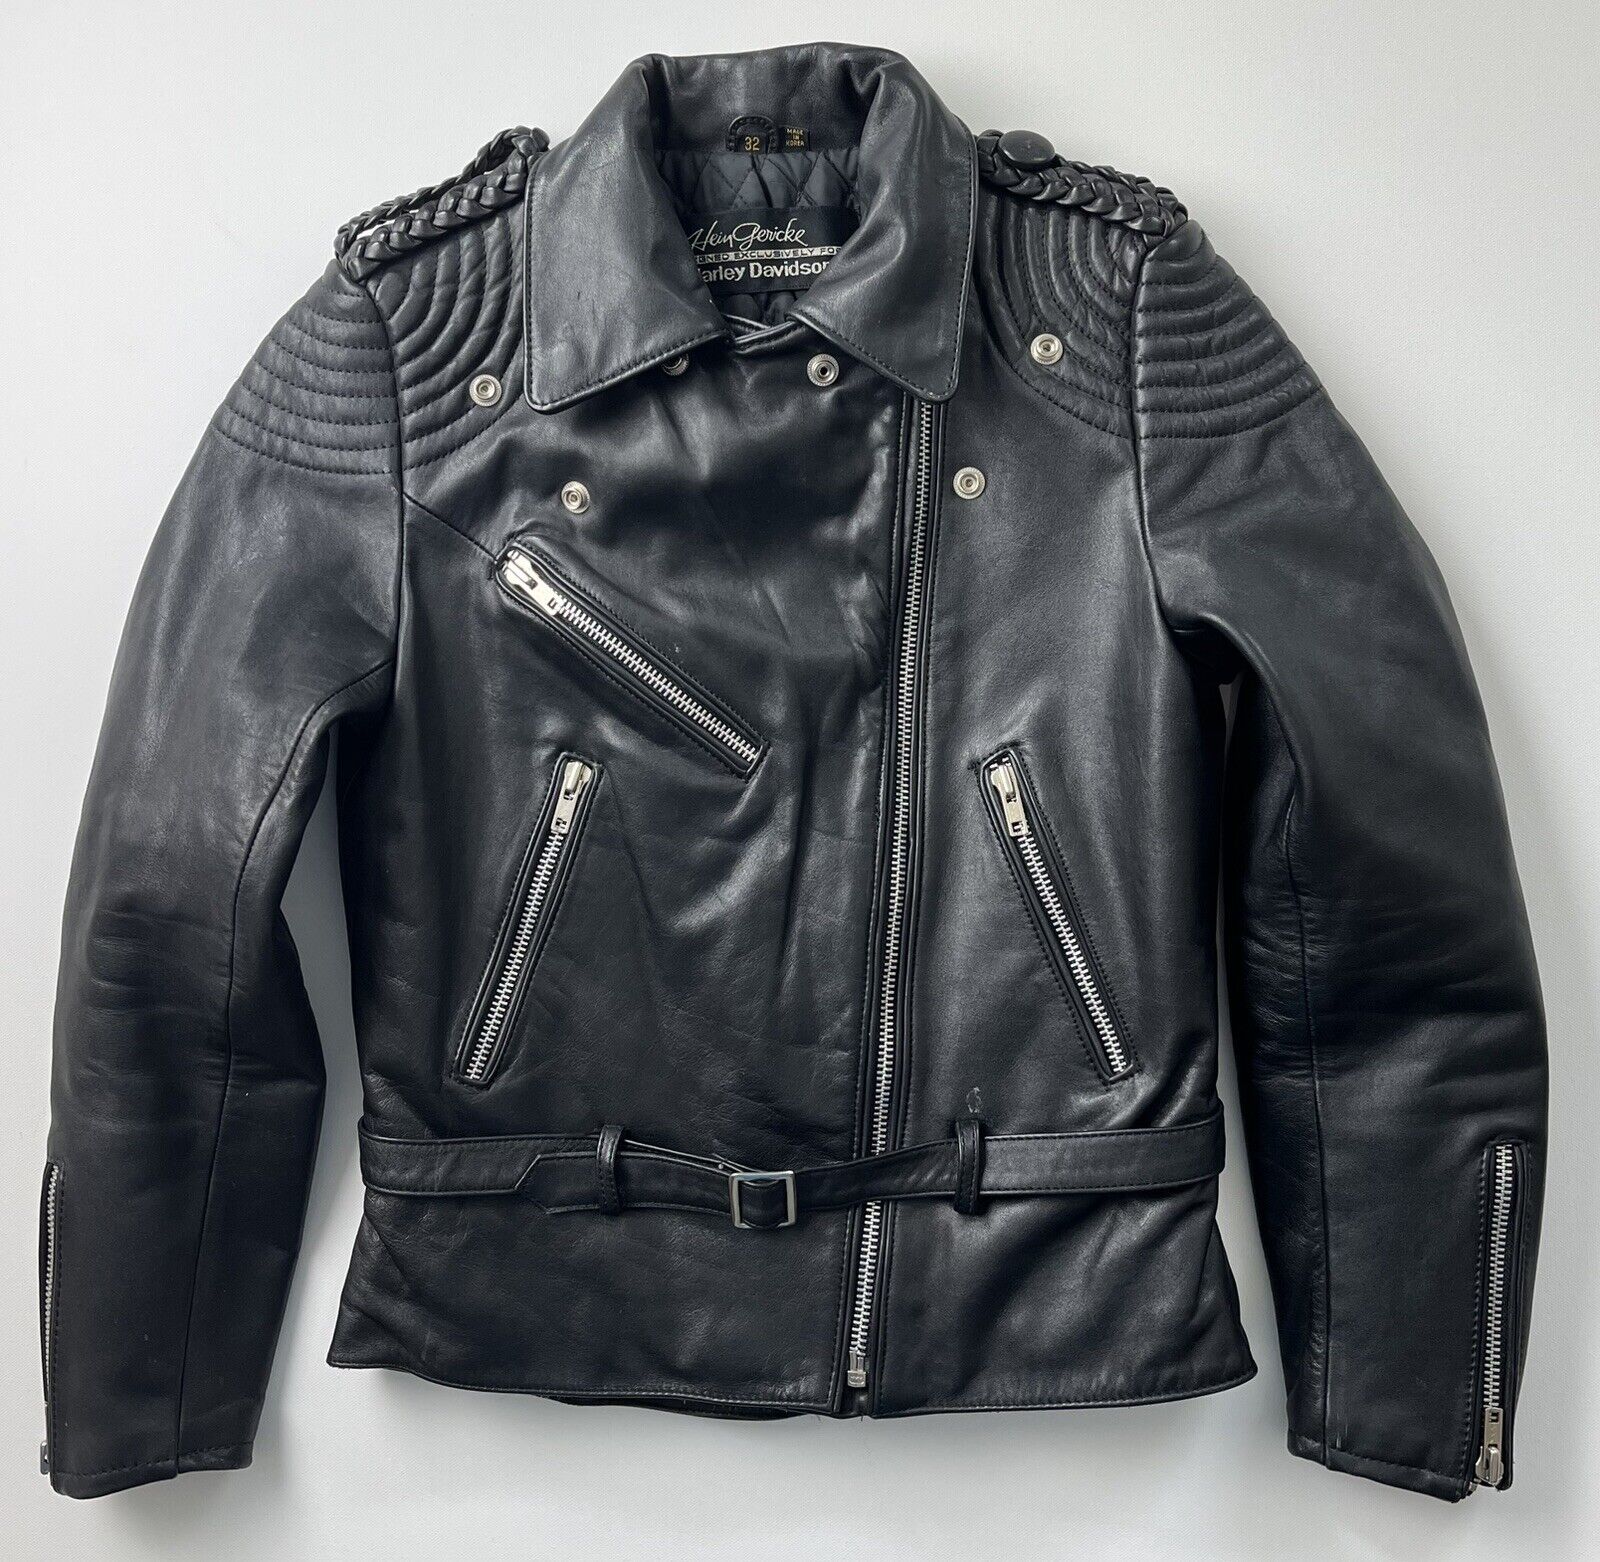 Hein Gericke Women’s Size 32 Leather Jacket Vintage Harley Davidson Biker Riding